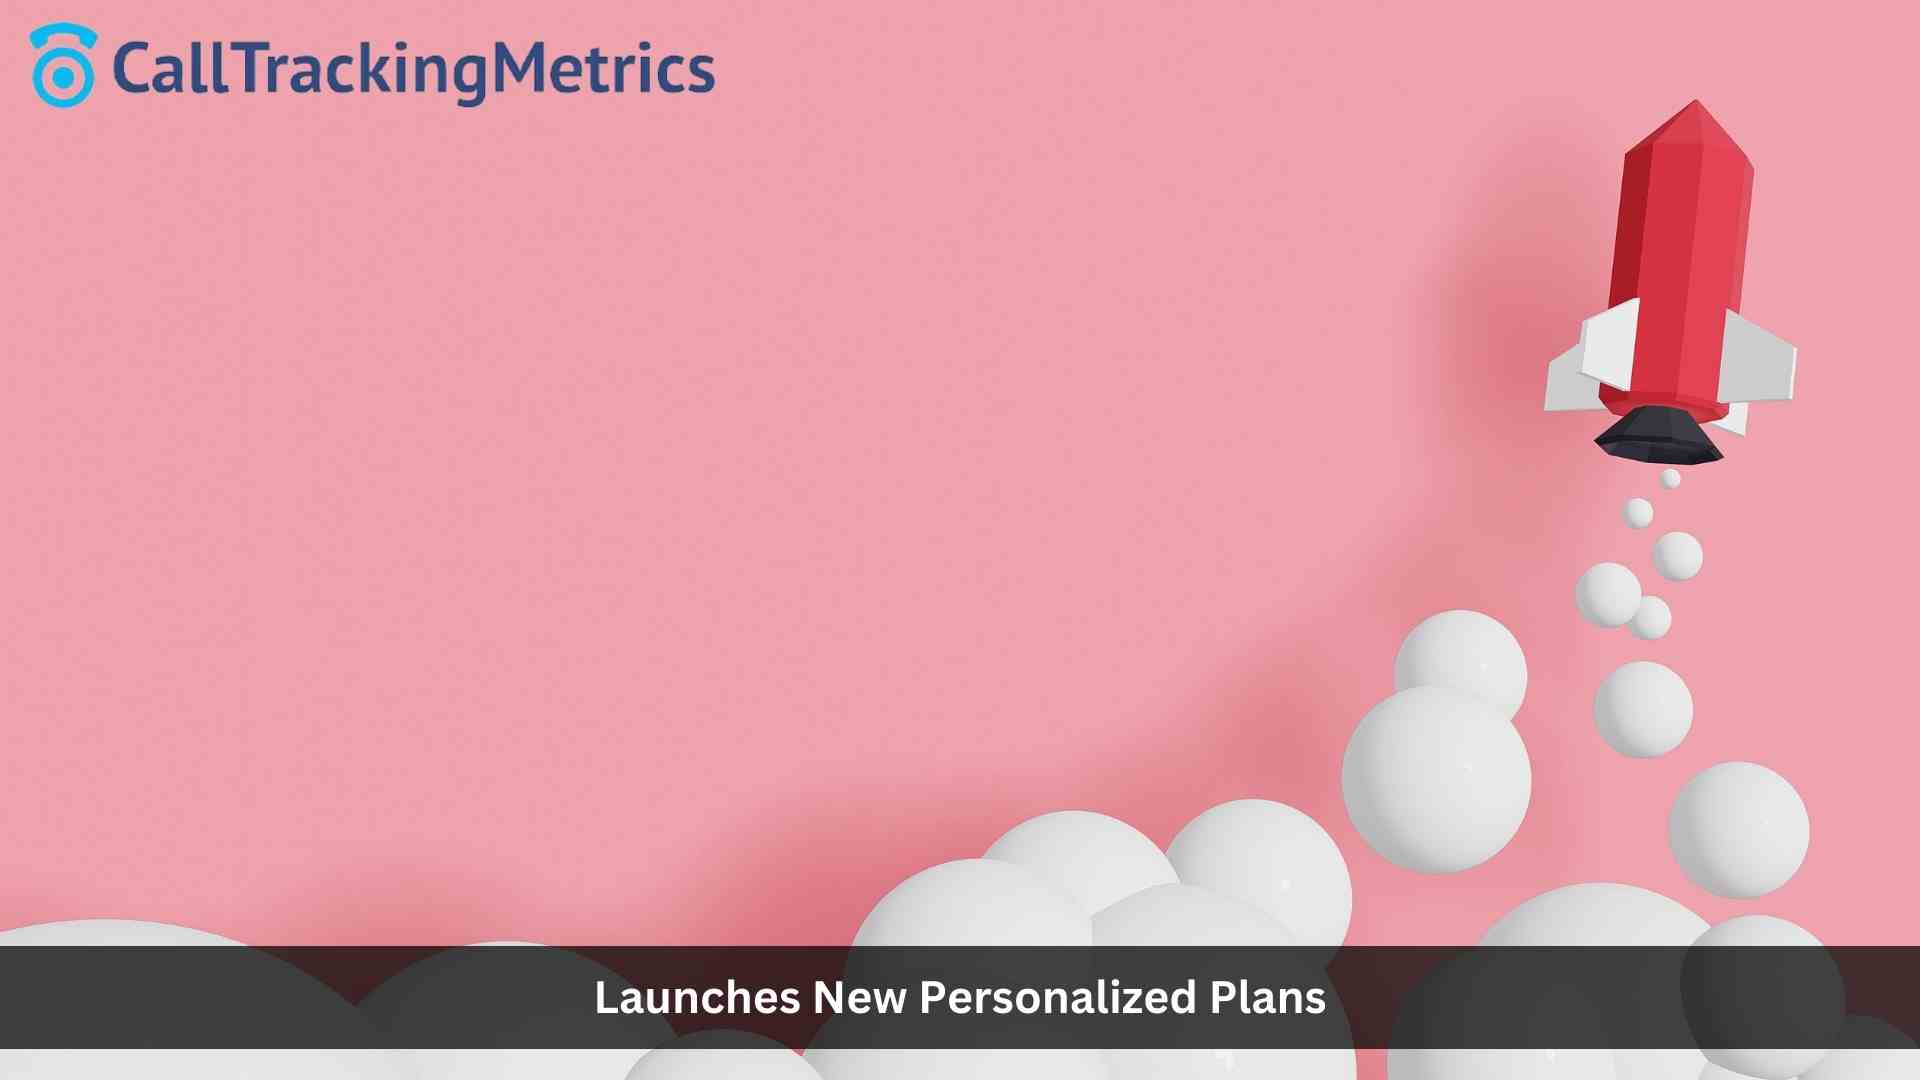 CallTrackingMetrics Launches New Personalized Plans to Power Digital Marketing Goals